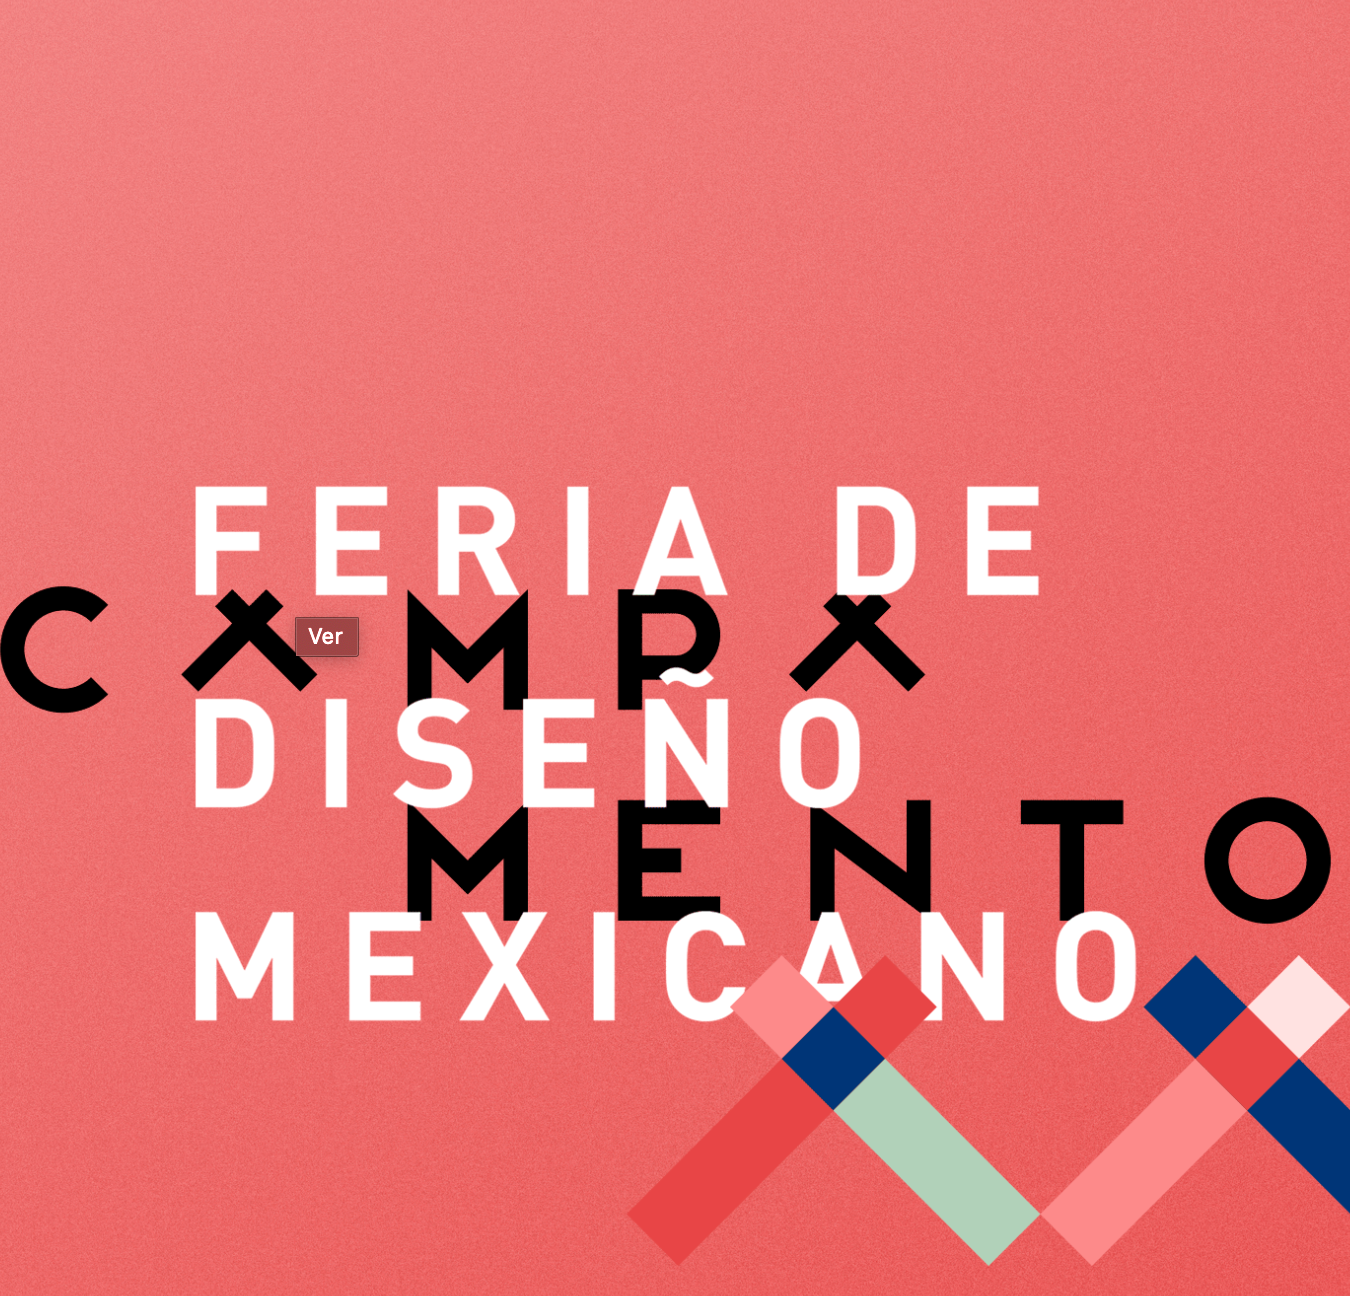 UPCOMING EVENT: CAMPAMENTO @ Guadalajara, Mexico - Jan 29 - 2 Feb. 2020